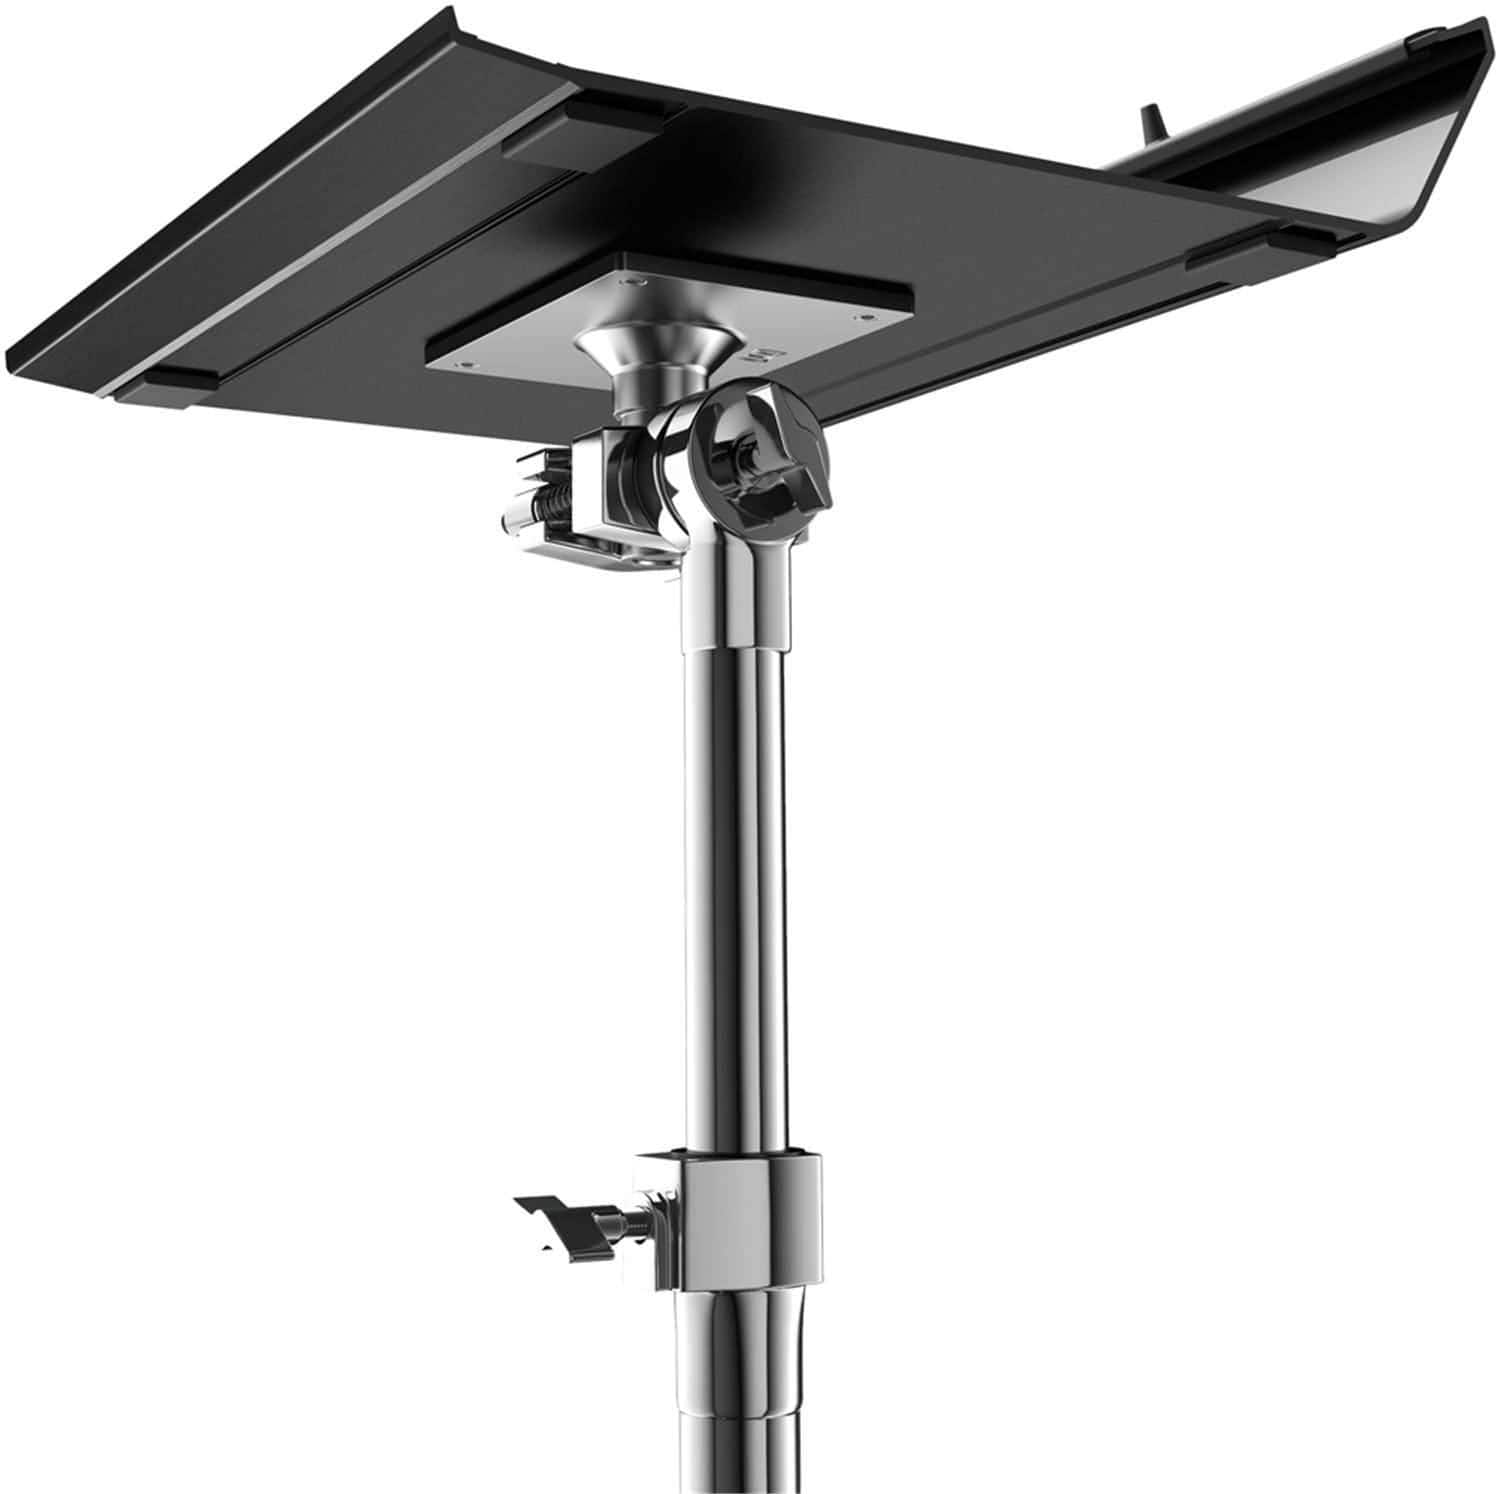 NI MASCHINE-STAND Stand & Adaptor for Maschine - PSSL ProSound and Stage Lighting